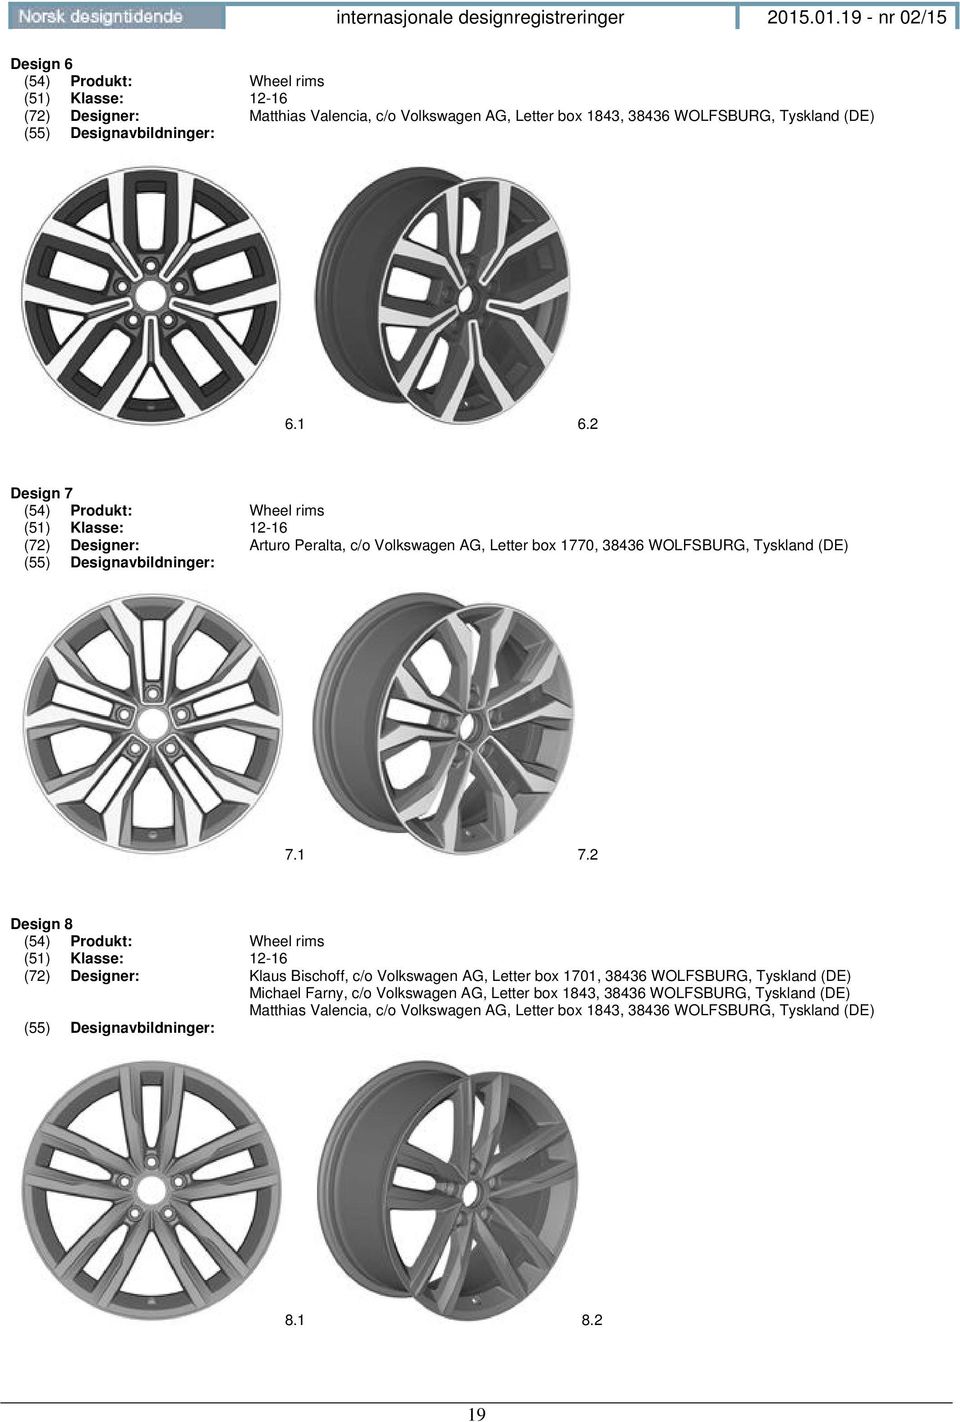 2 Design 8 (54) Produkt: Wheel rims (51) Klasse: 12-16 (72) Designer: Klaus Bischoff, c/o Volkswagen AG, Letter box 1701, 38436 WOLFSBURG, Tyskland (DE) Michael